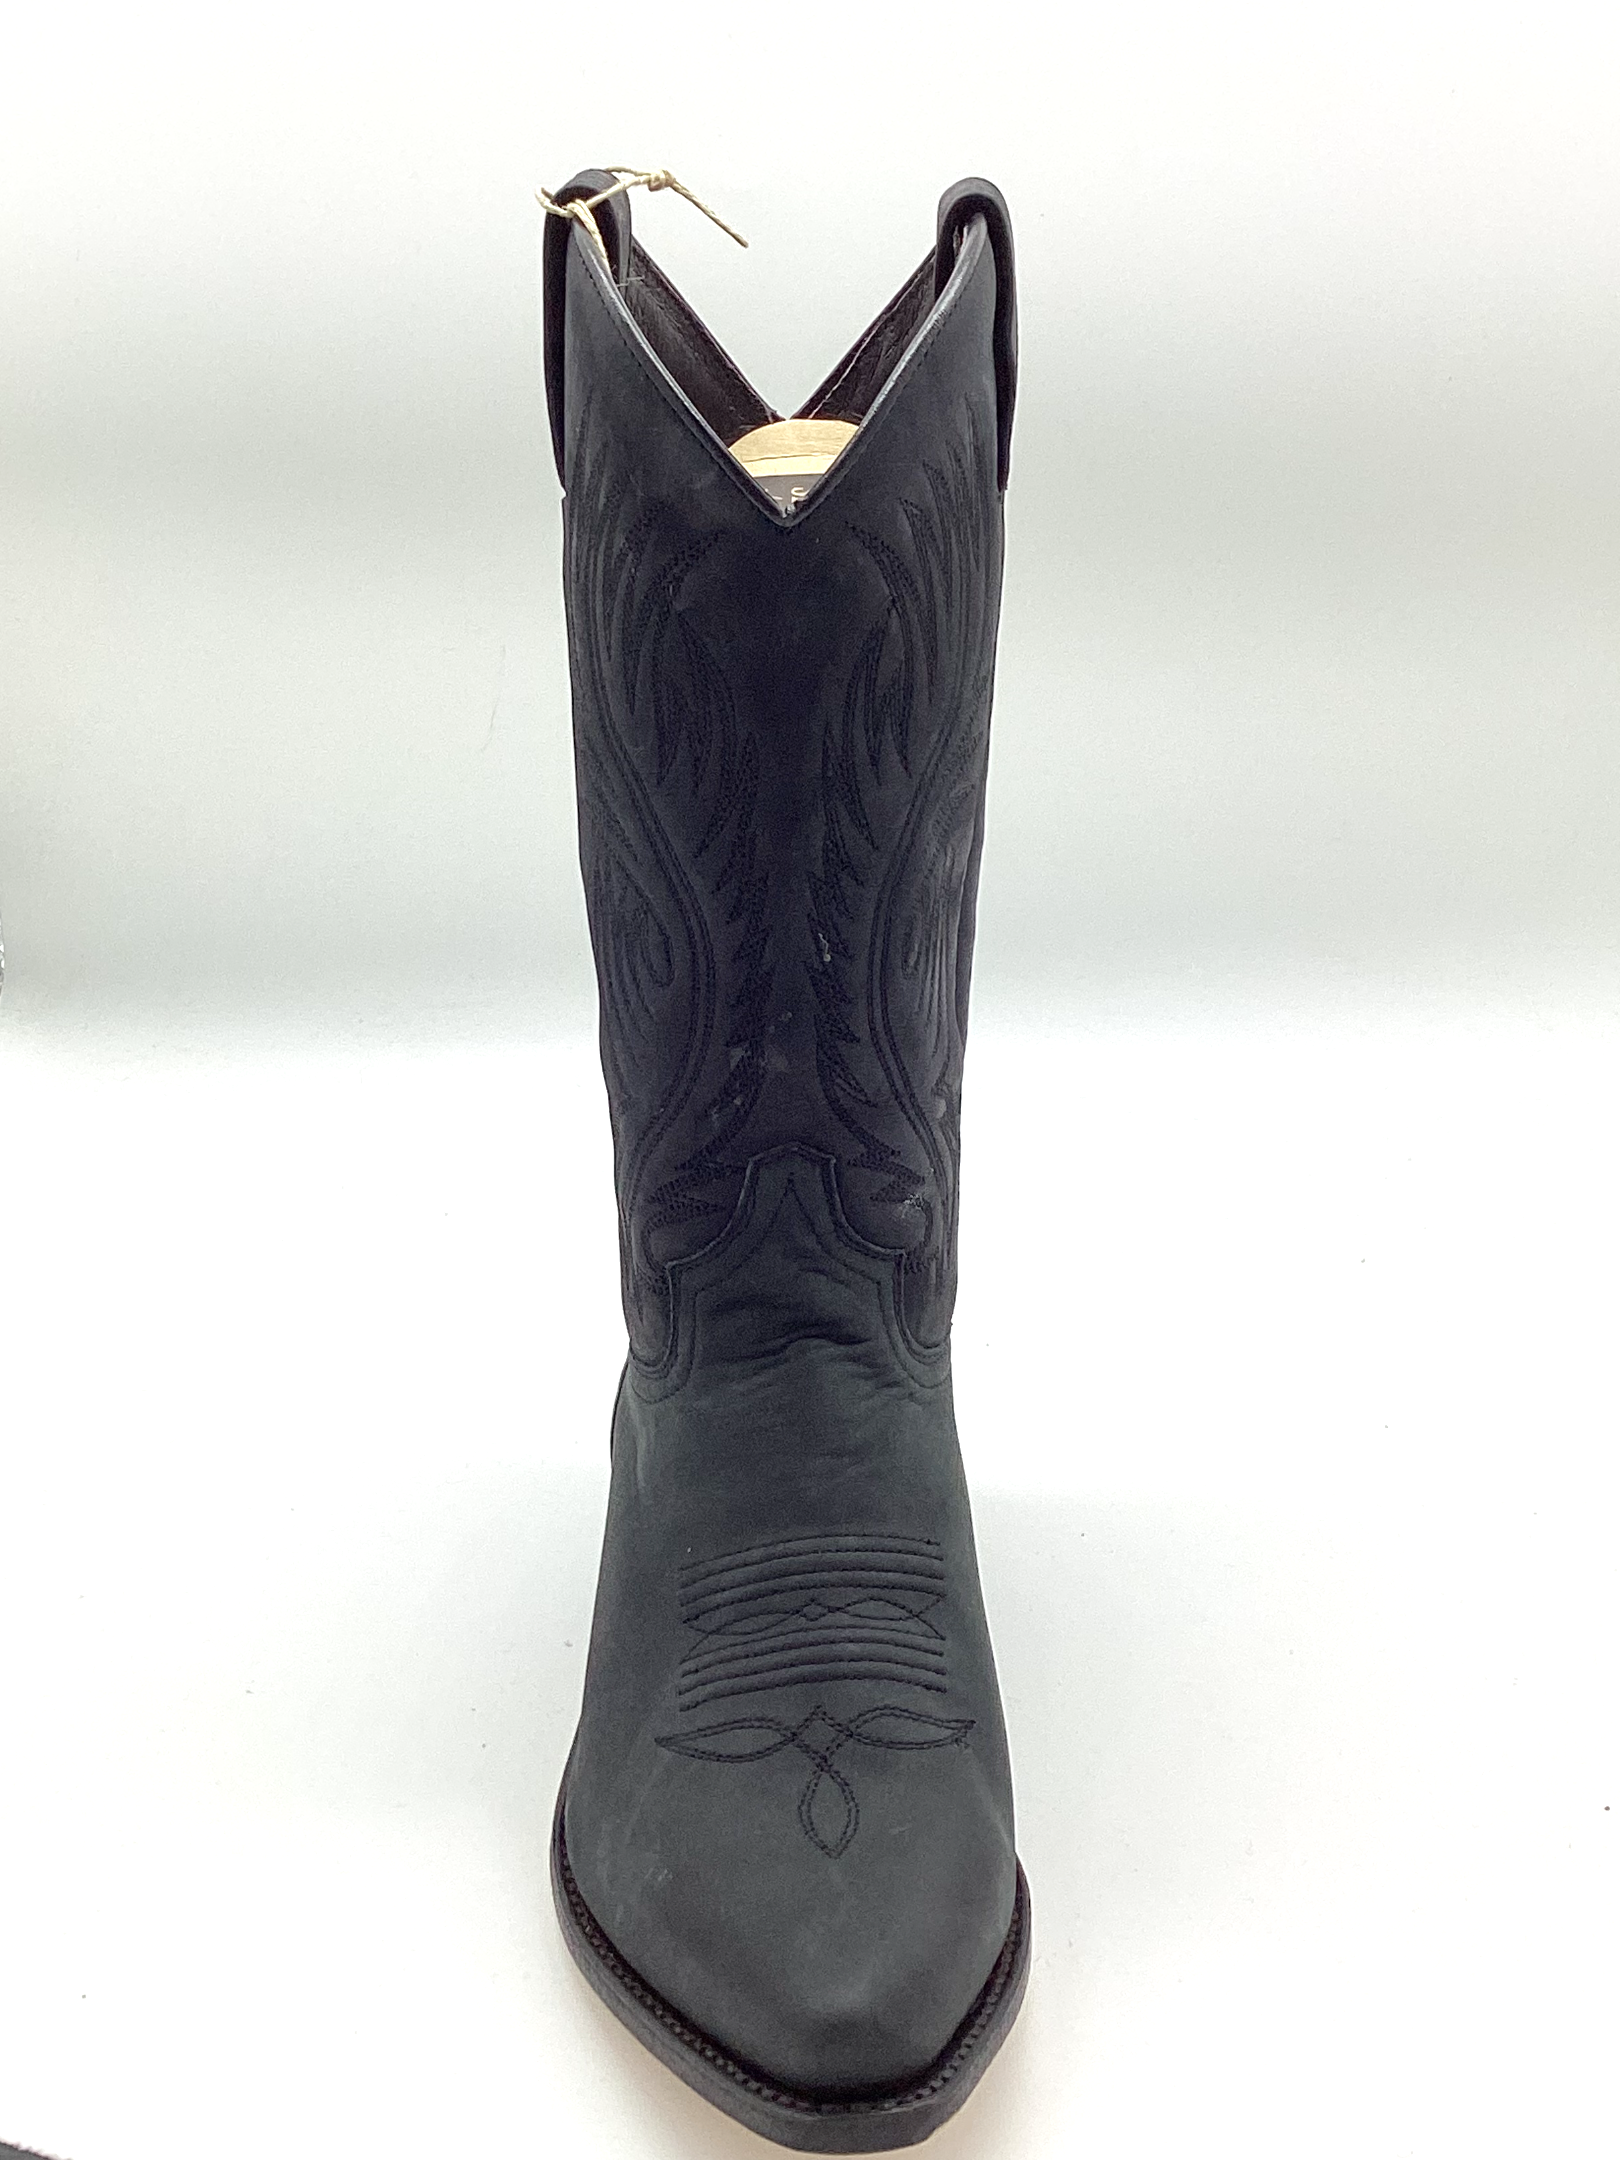 SENDRA women's boots western/cowboy/biker boots black